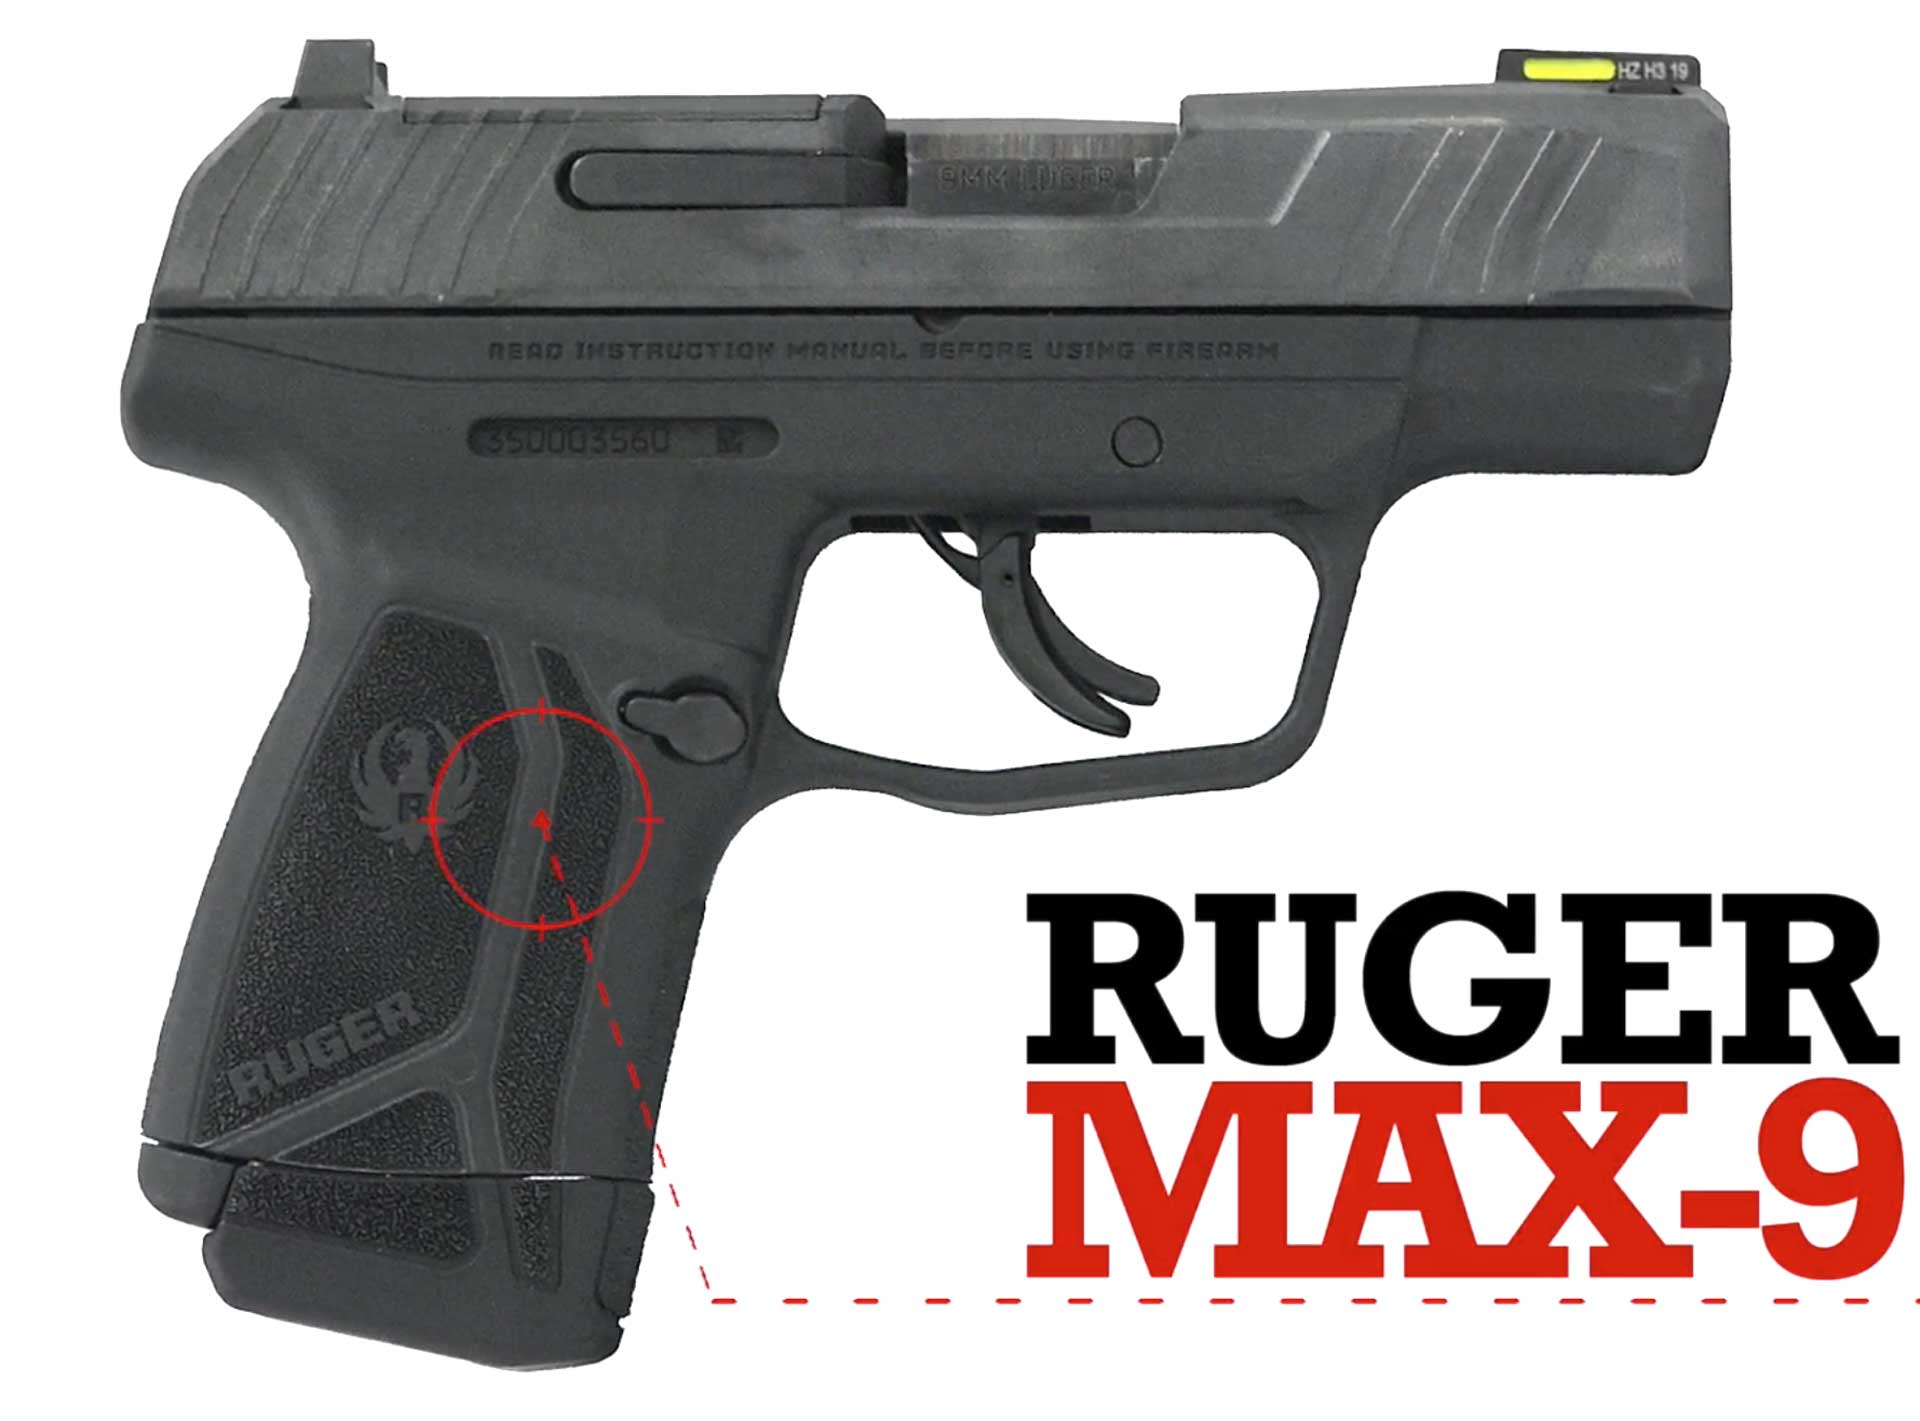 right side black gun pistol handgun plastic metal text noting make and model &quot;Ruger MAX-9&quot;